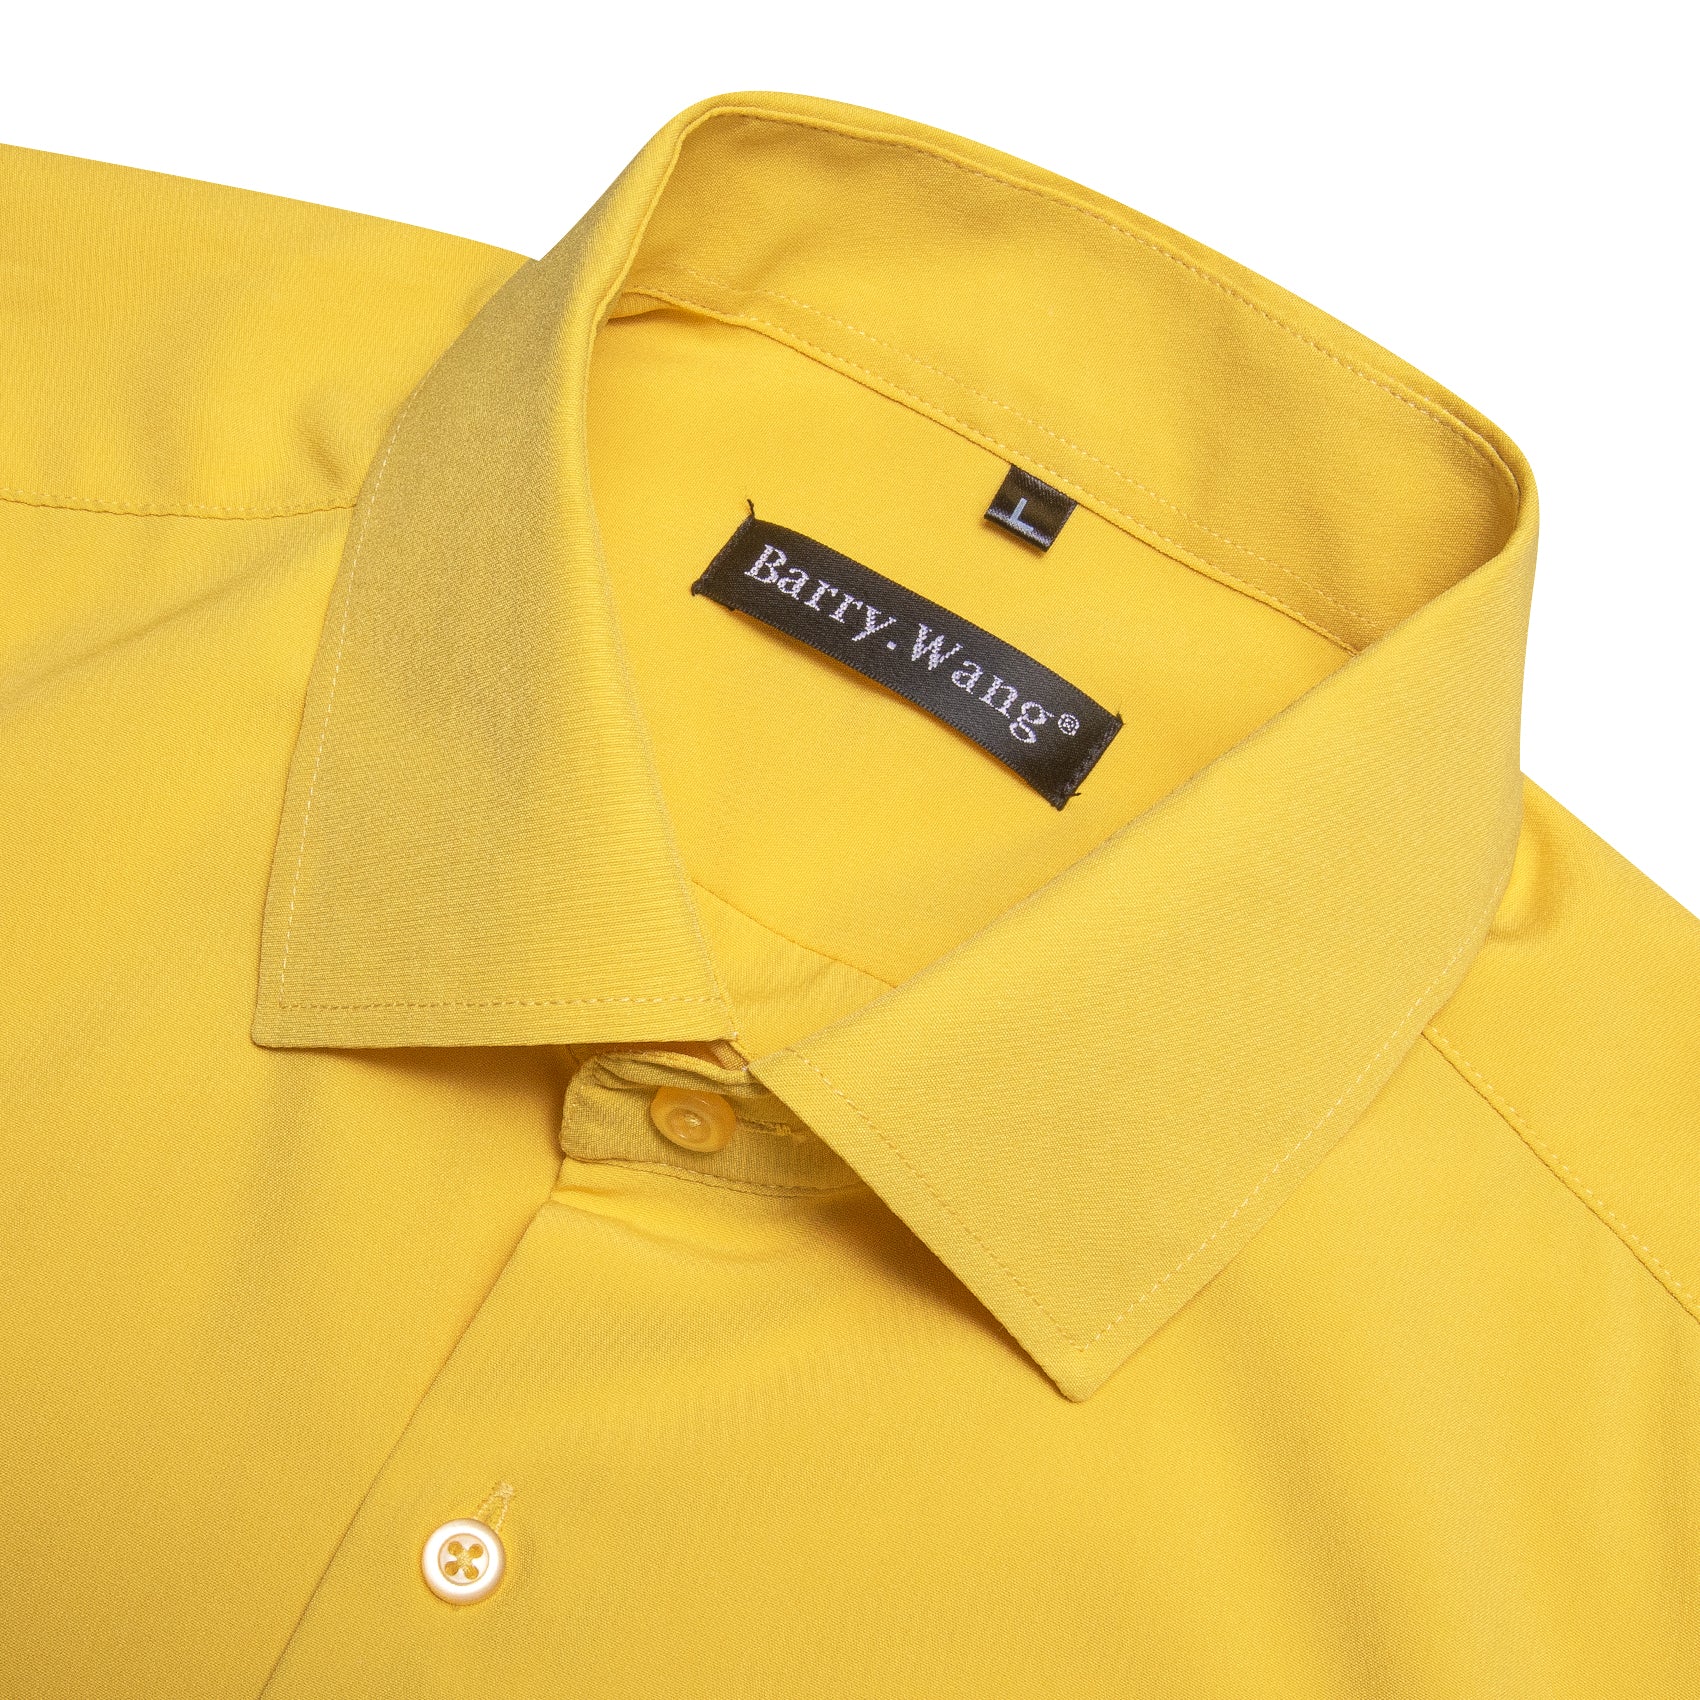 Barry.wang Button Down Shirt Bright Yellow Solid Silk Men's Long Sleeve Shirt